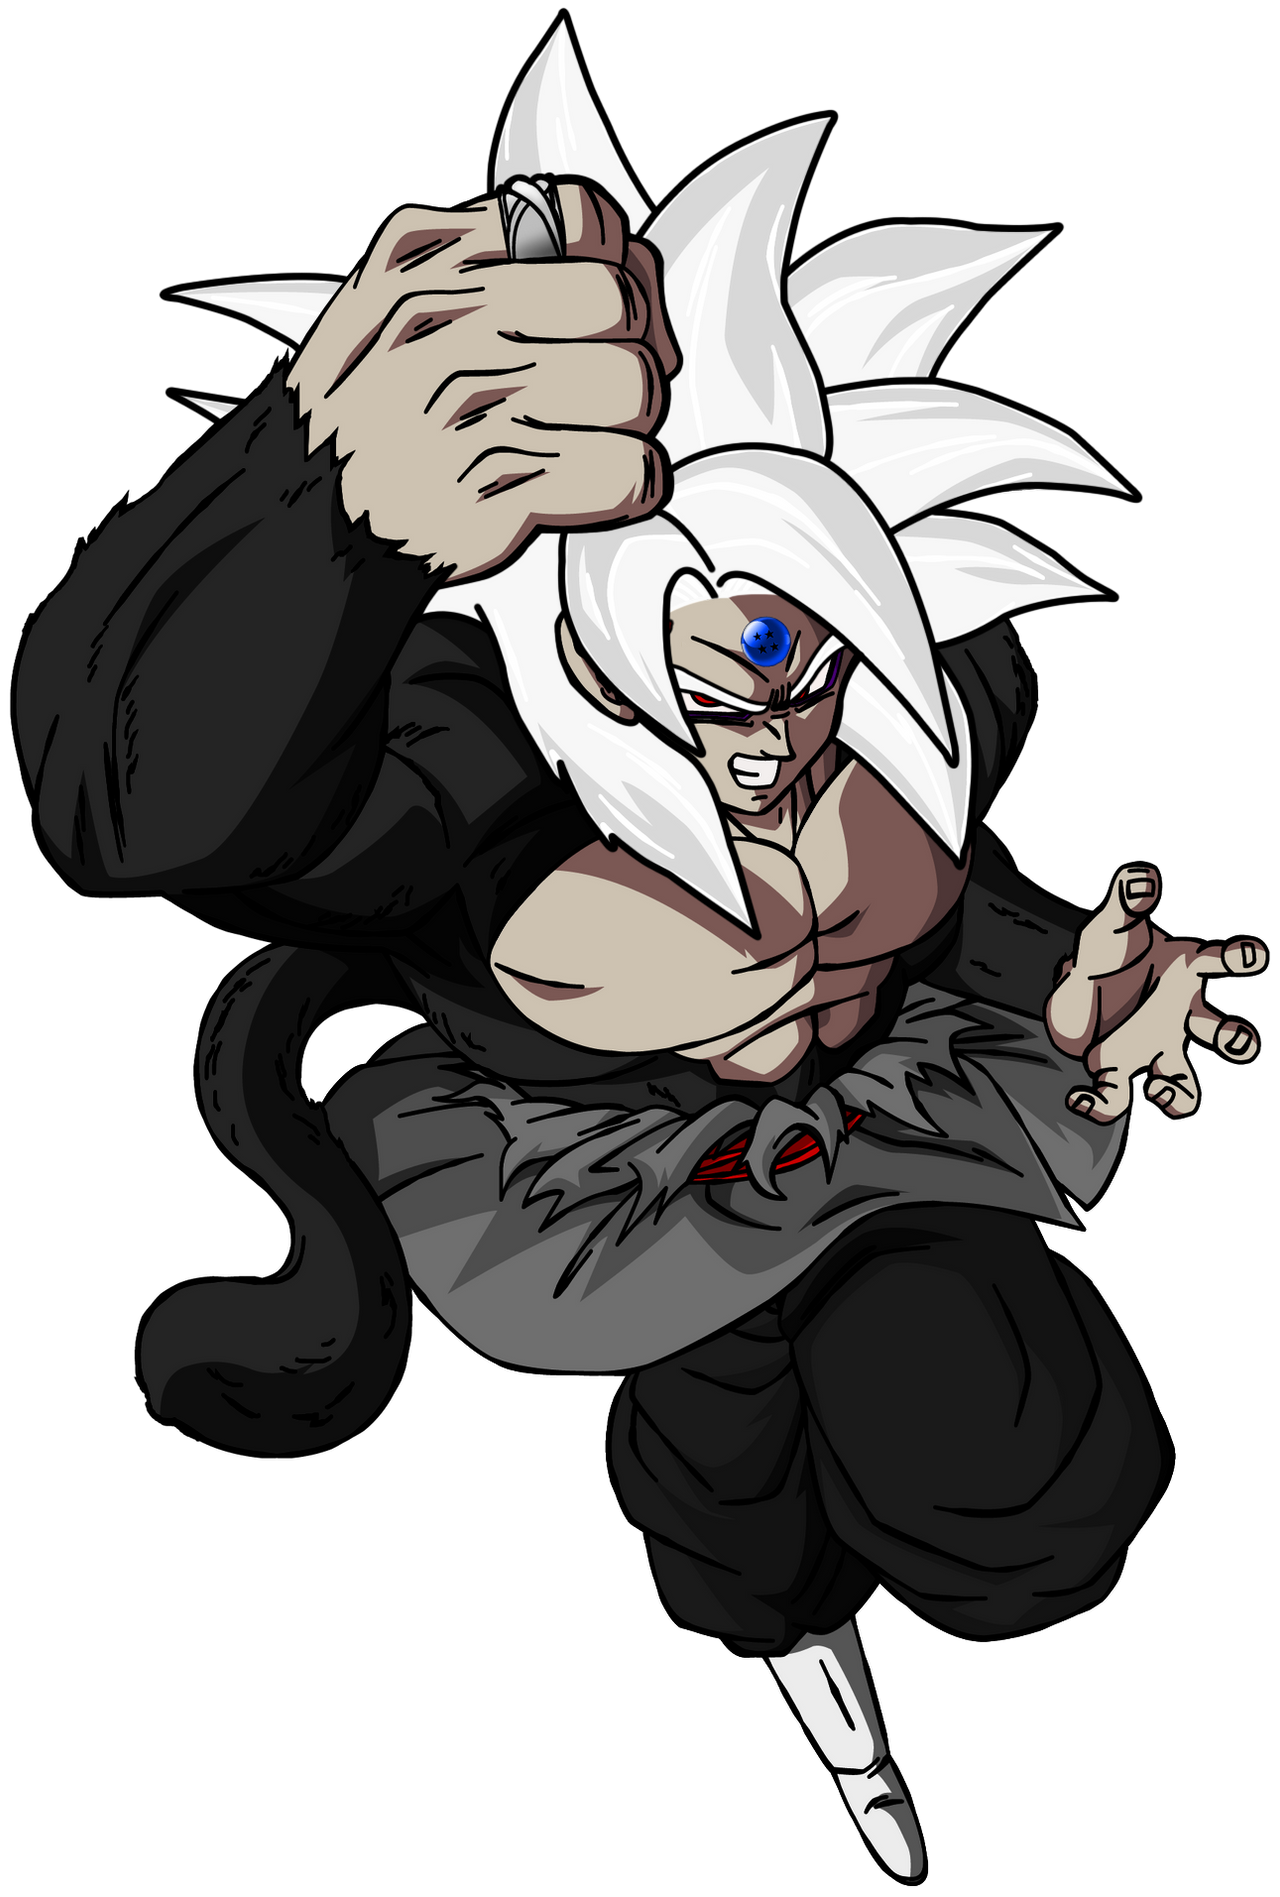 Goku Super Saiyan 6 by ChronoFz on DeviantArt